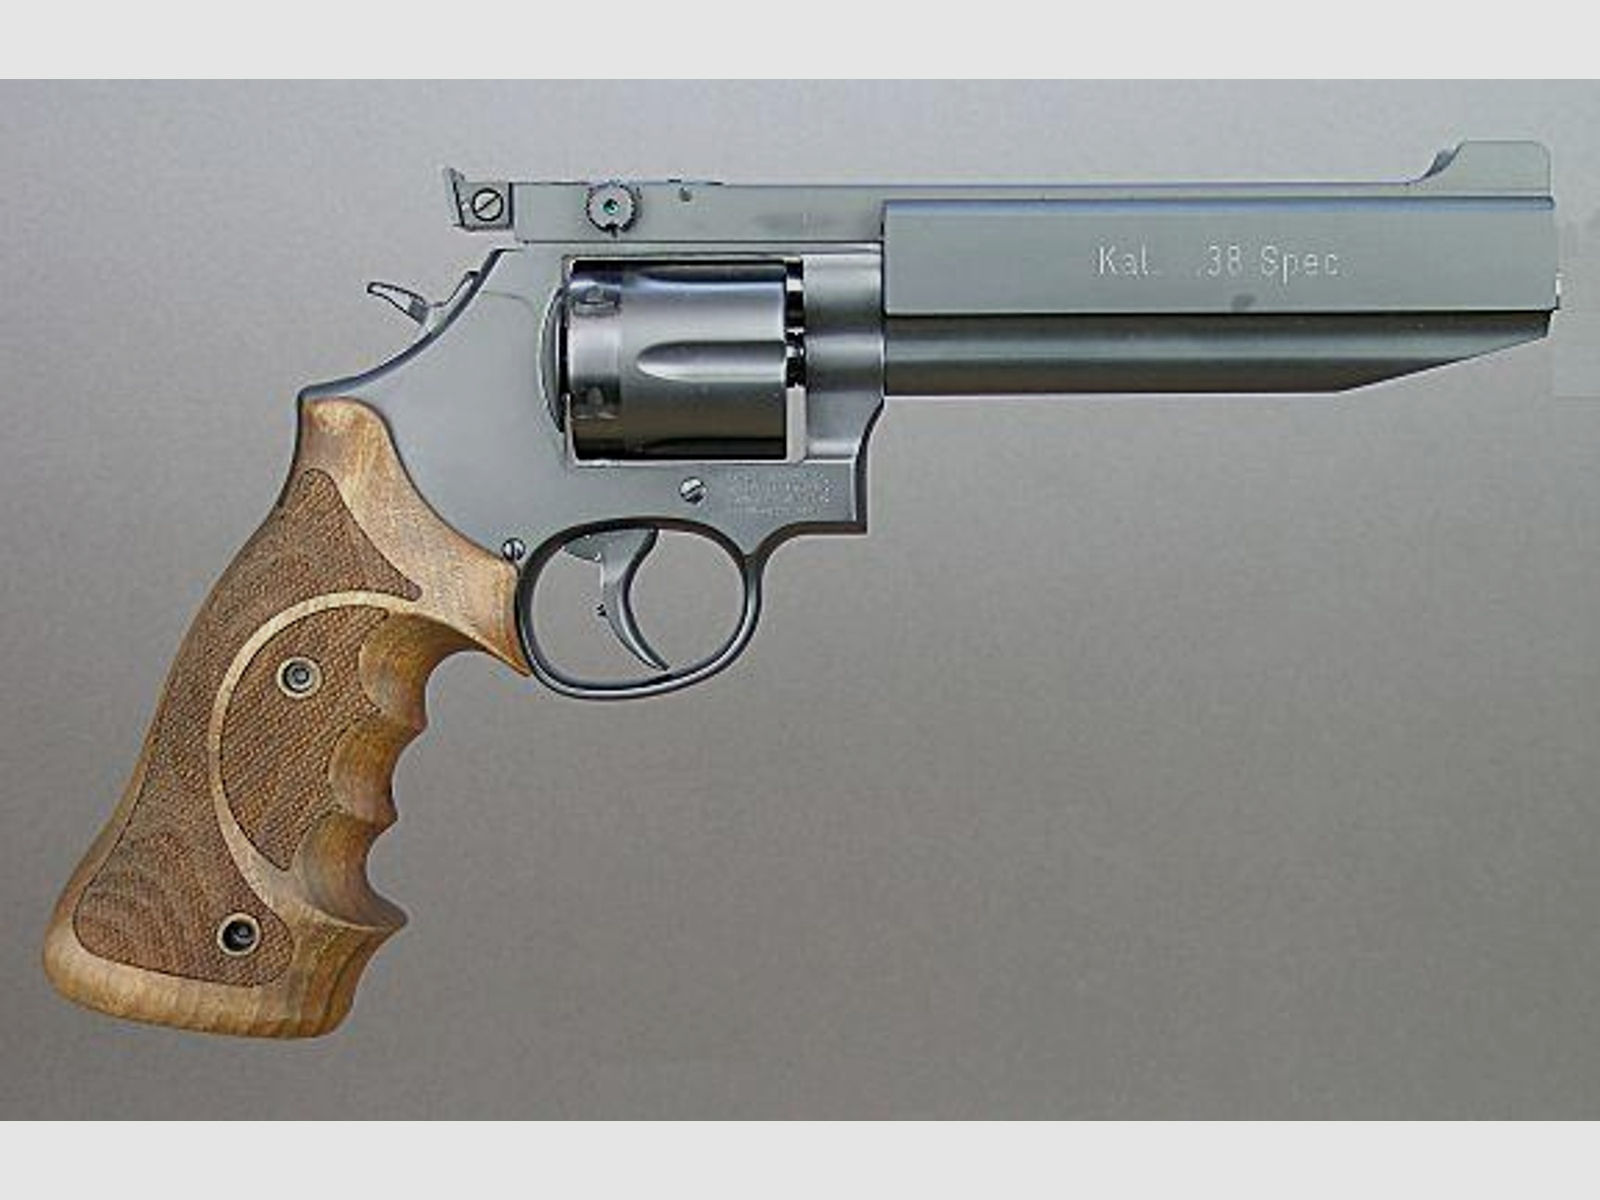 T'n T Triebel Revolver Mod. Terminator-S&W L-Rahmen .357Mag